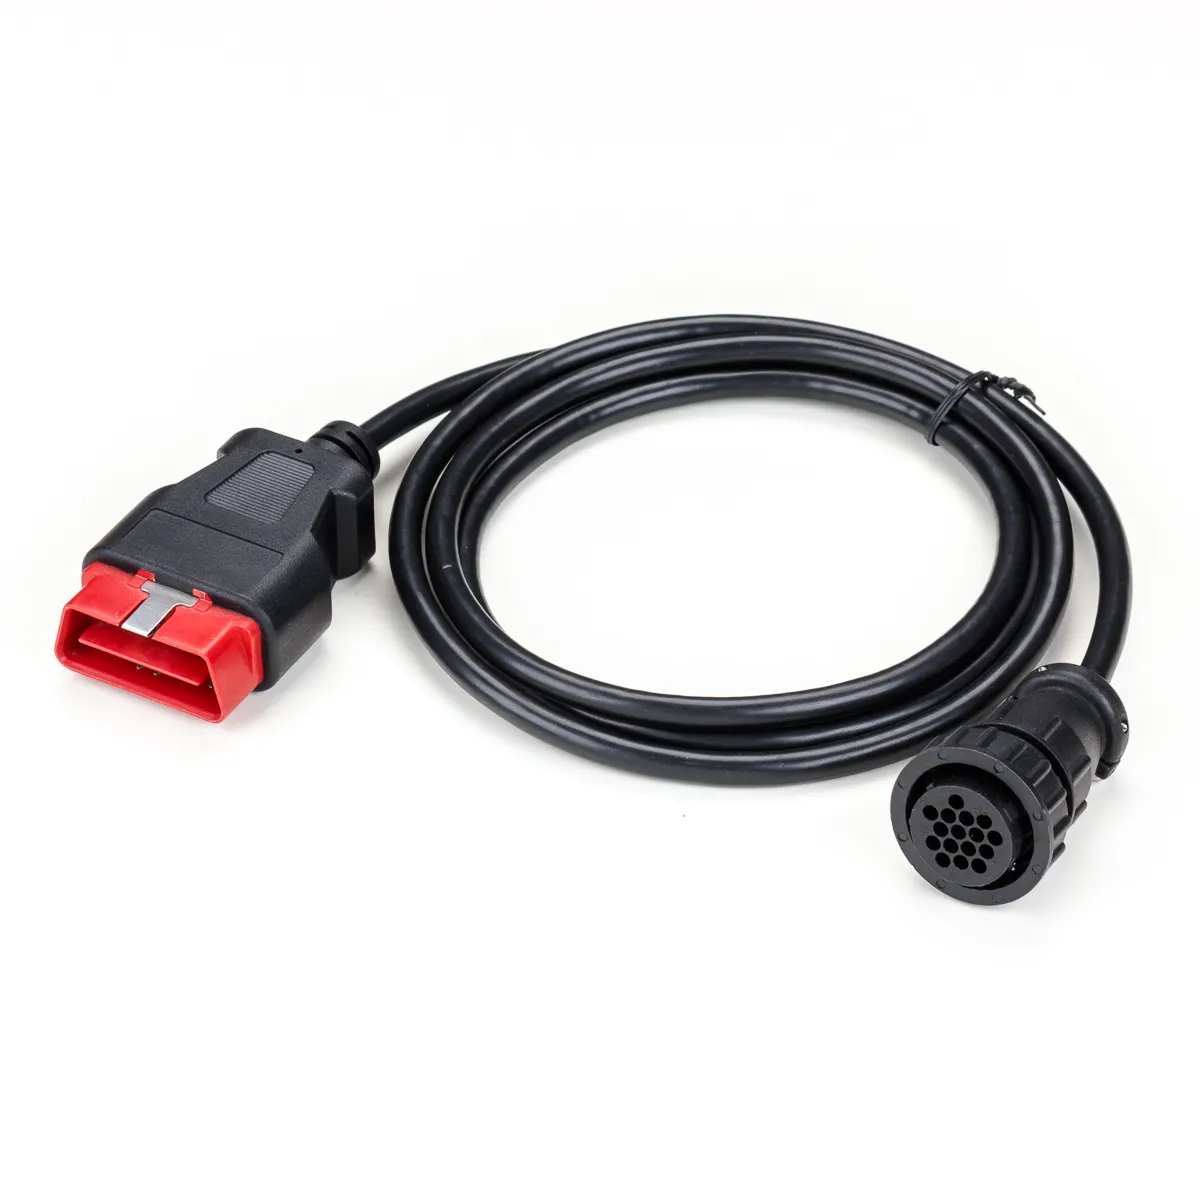 OBD 16-poliger Stecker an cpc 16-polige Buchse obd Adapter Verlängerung kabel